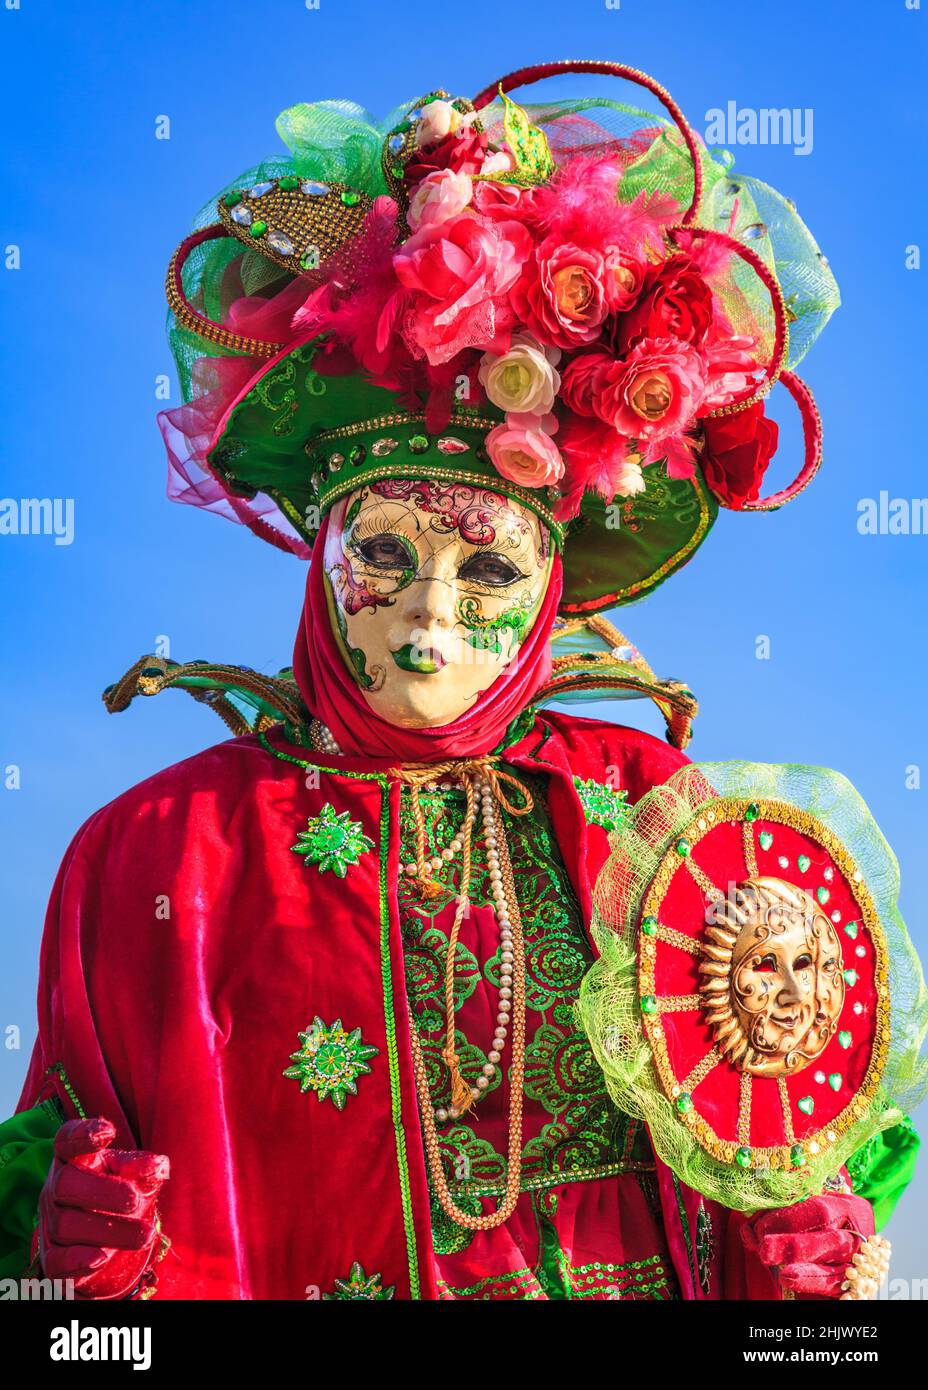 Woman in colourful historic fancy dress costume, hat and mask poses at the Venice Carnival, Carnivale di Venezia, Veneto, Italy Stock Photo